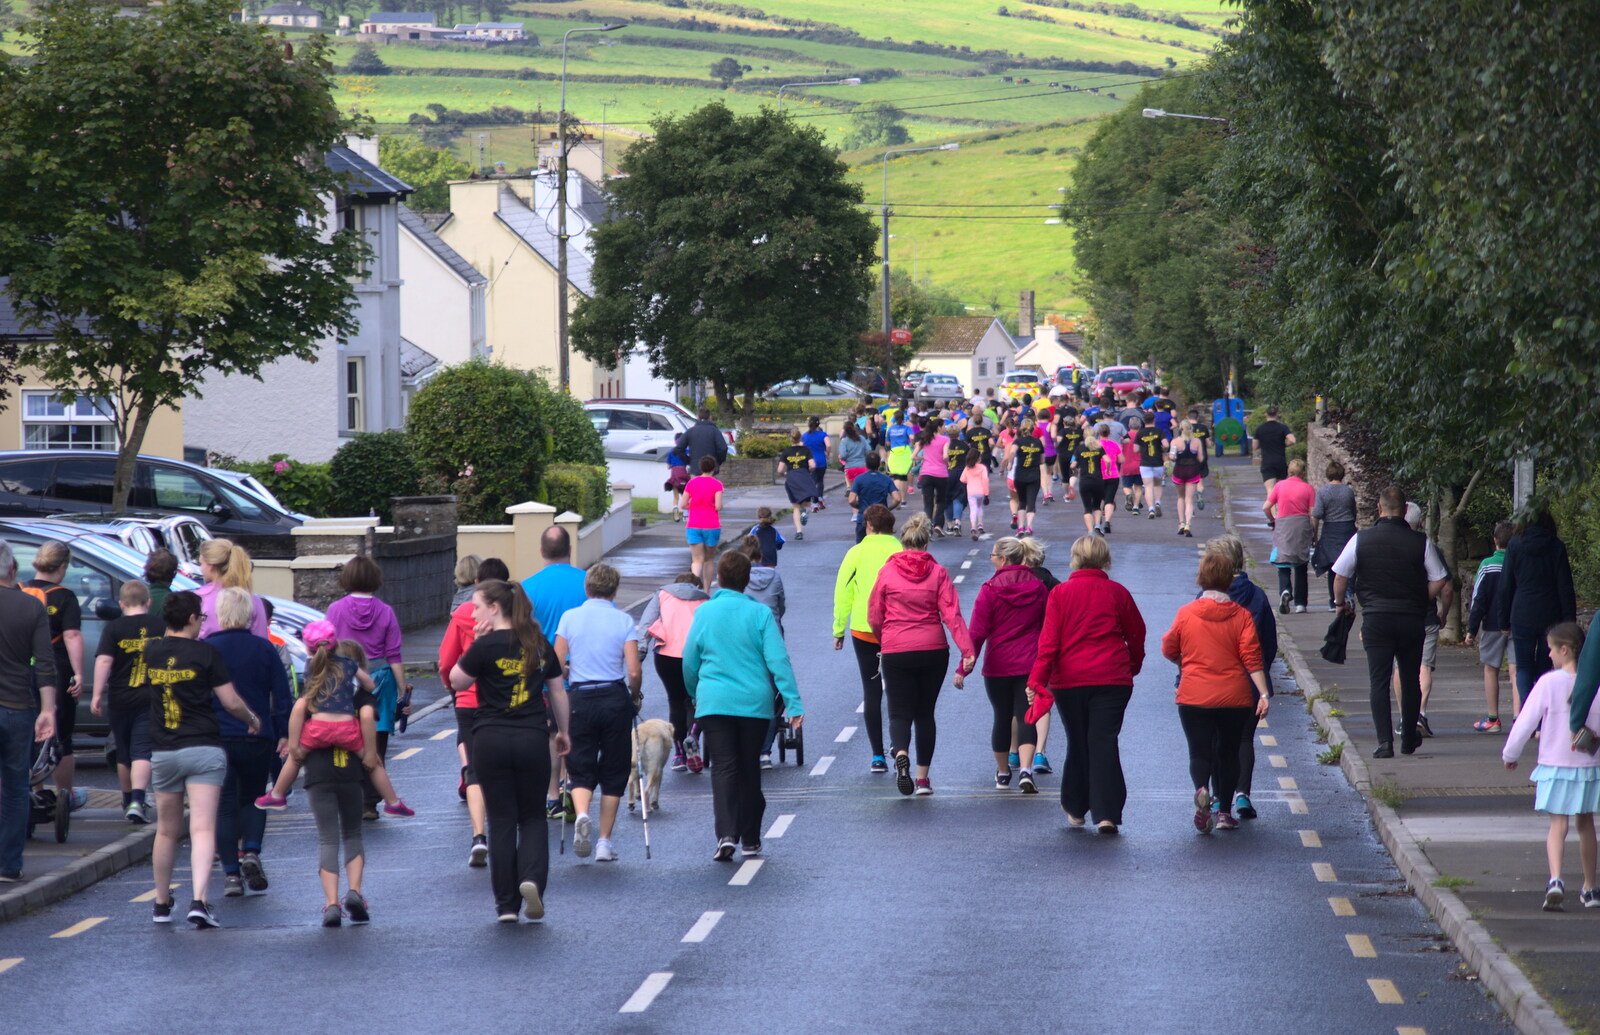 The runners and tag-alongs head off up the main road from The Annascaul 10k Run, Abha na Scáil, Kerry, Ireland - 5th August 2017